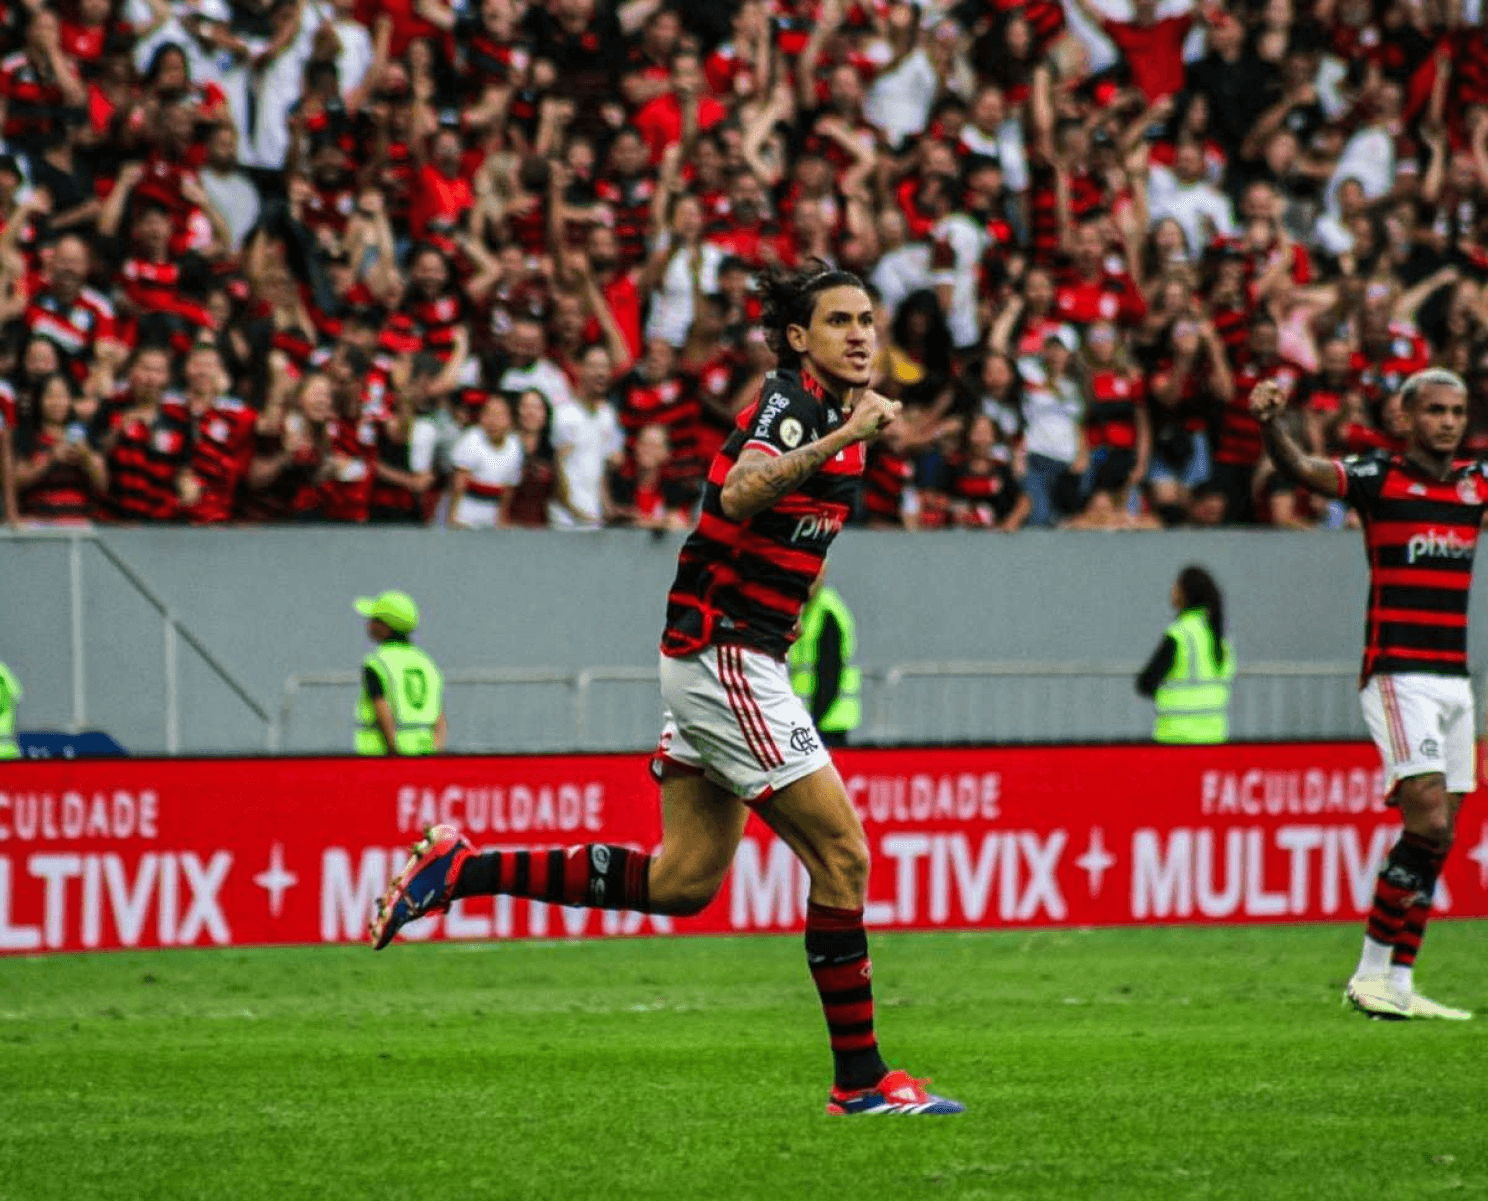 De virada, Flamengo vence Criciúma e faz a festa da torcida no Mané Garrincha